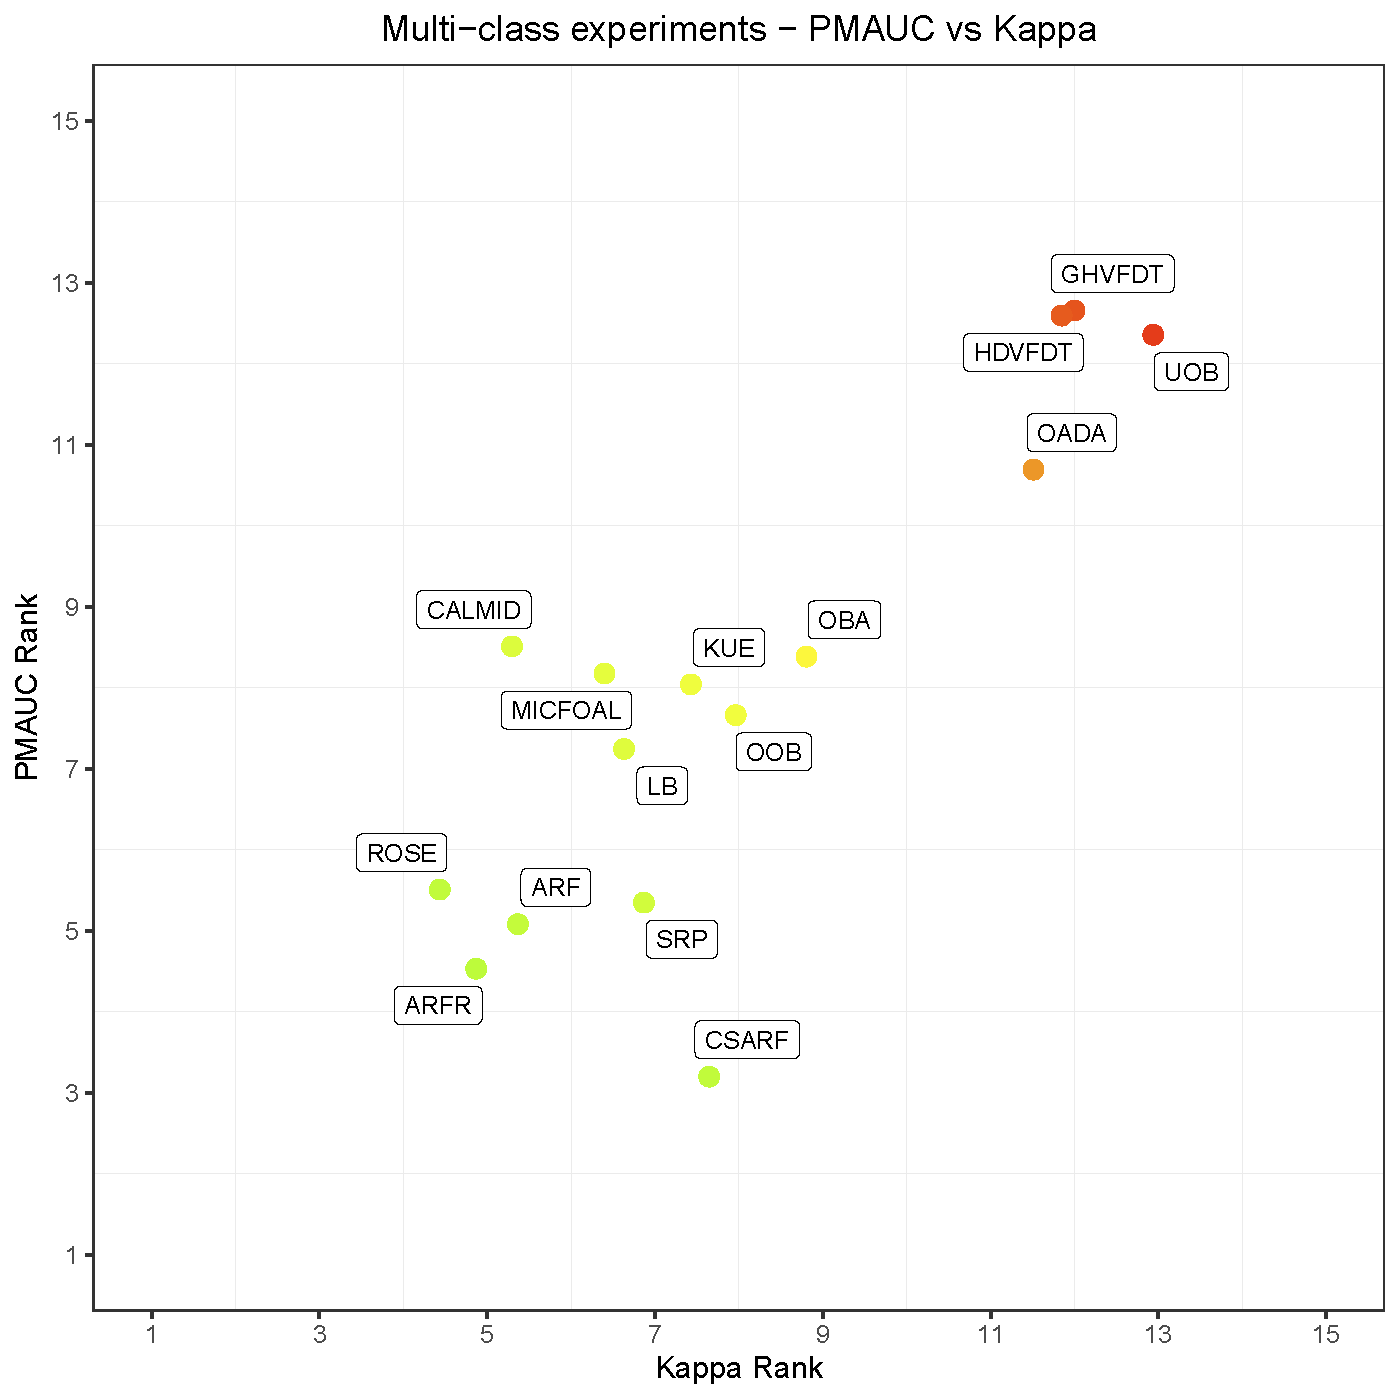 Multi-class experiments: PMAUC vs Kappa